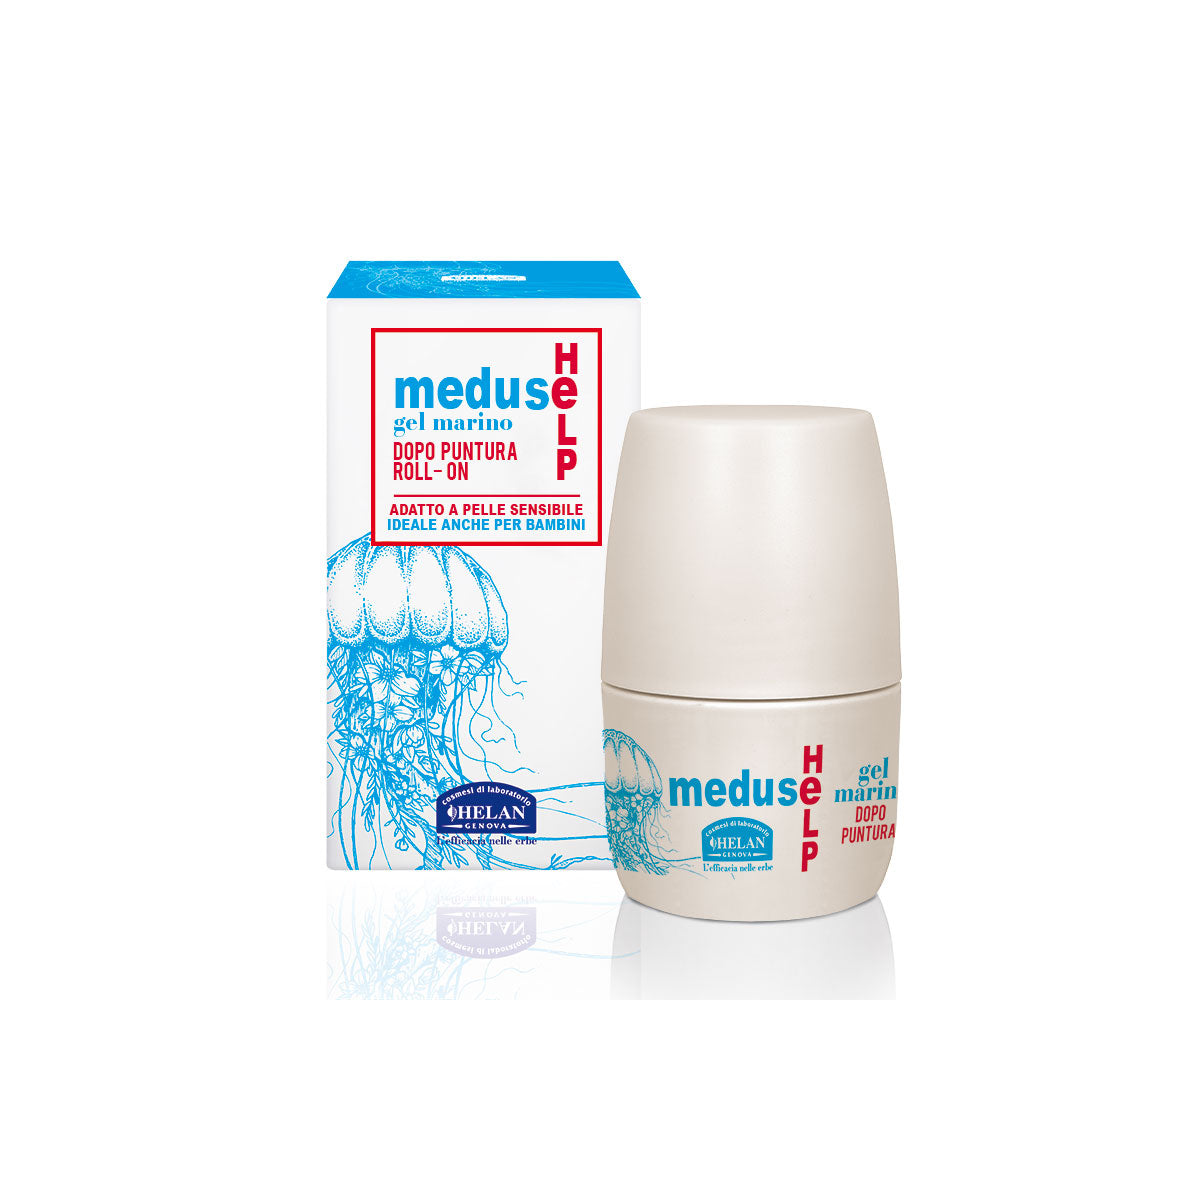 Helan Meduse Help Gel Marino Dopo Puntura Medusa Roll-on - helan meduse help gel